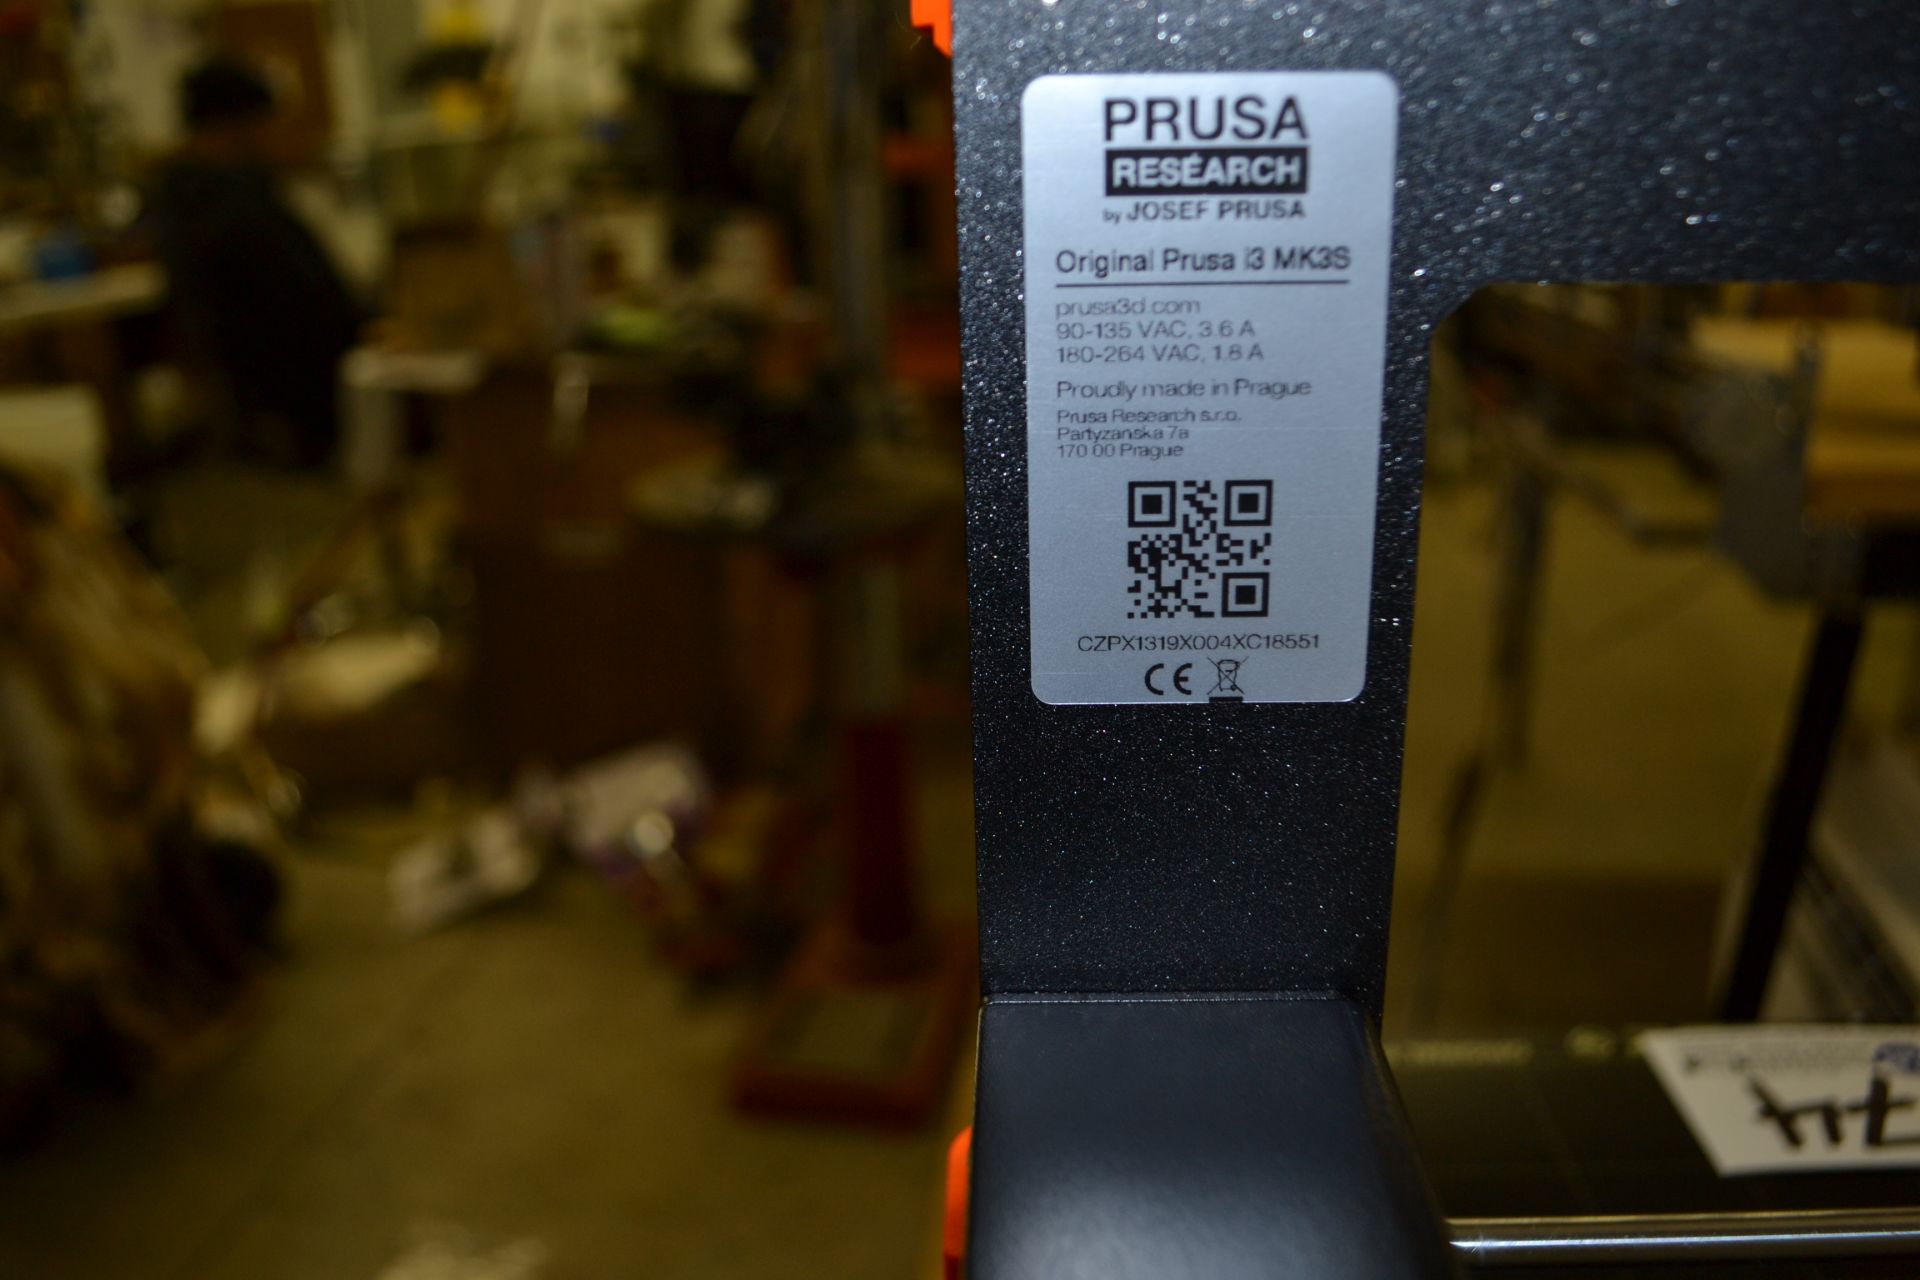 Original Prusa Research i3 MK3S 3D Printer "By Josef Prusa" - Image 3 of 4